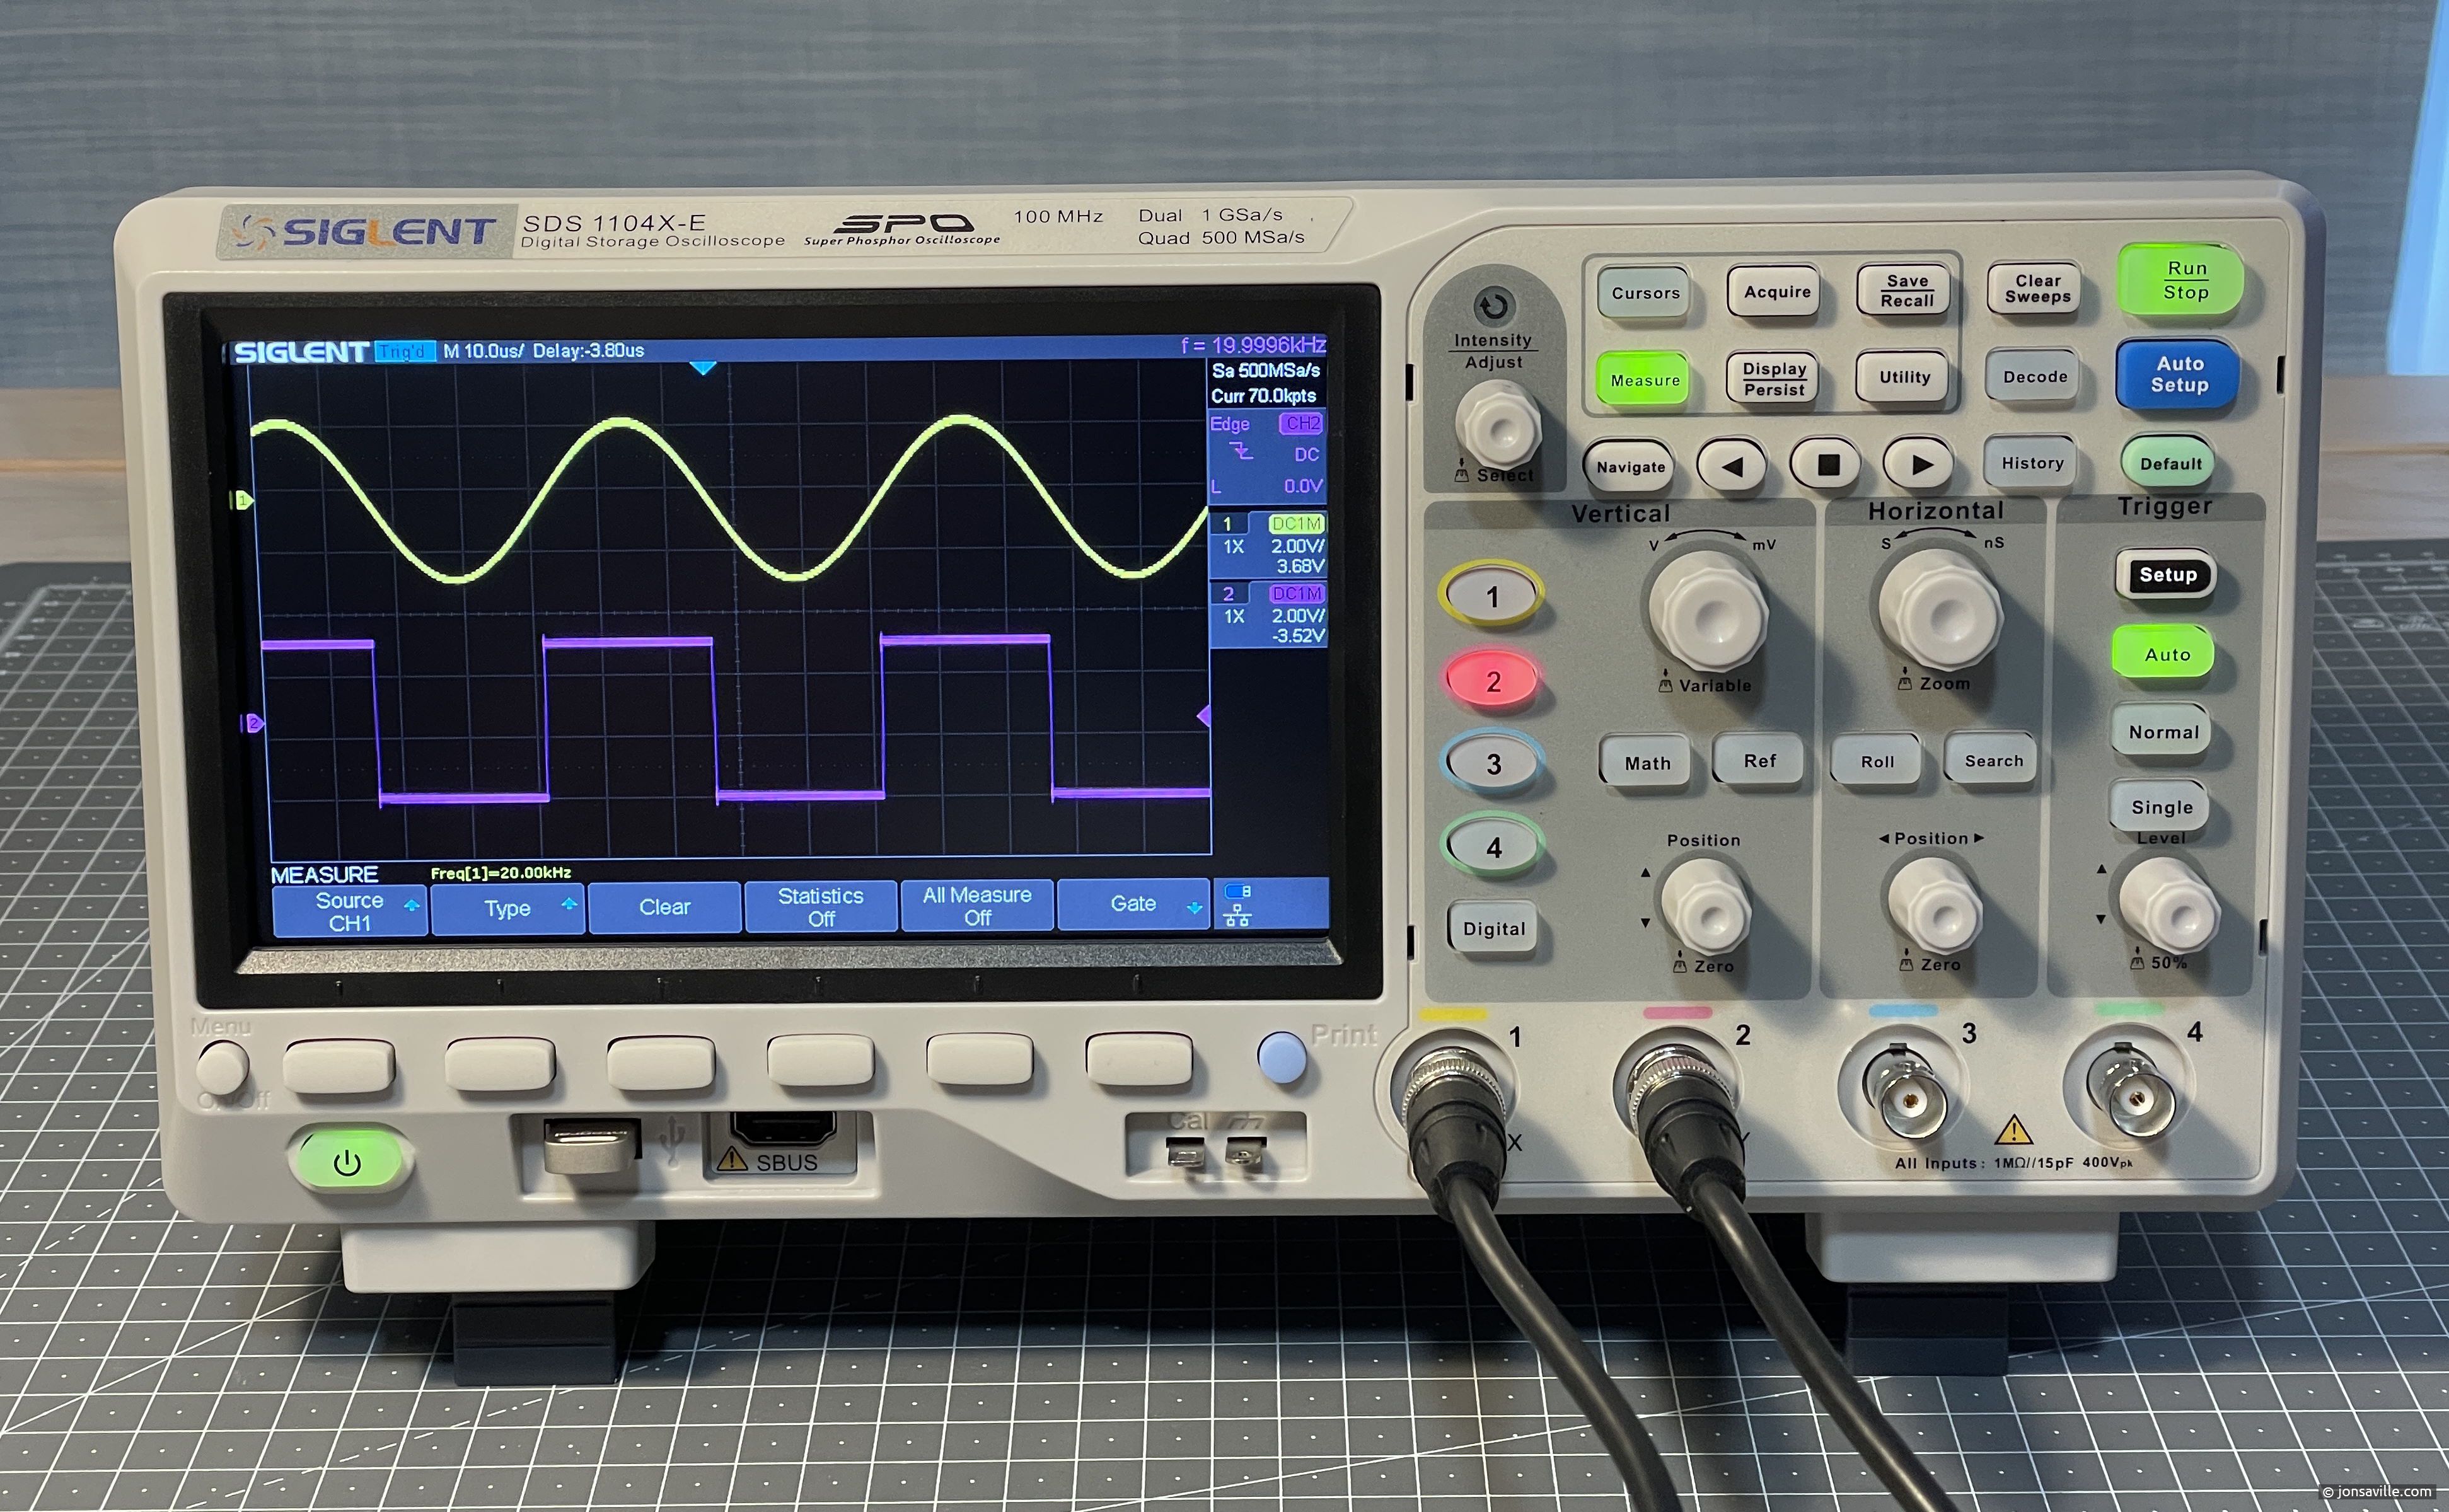 Siglent SDS1104X-E, a 100MHz 4-channel oscilloscope